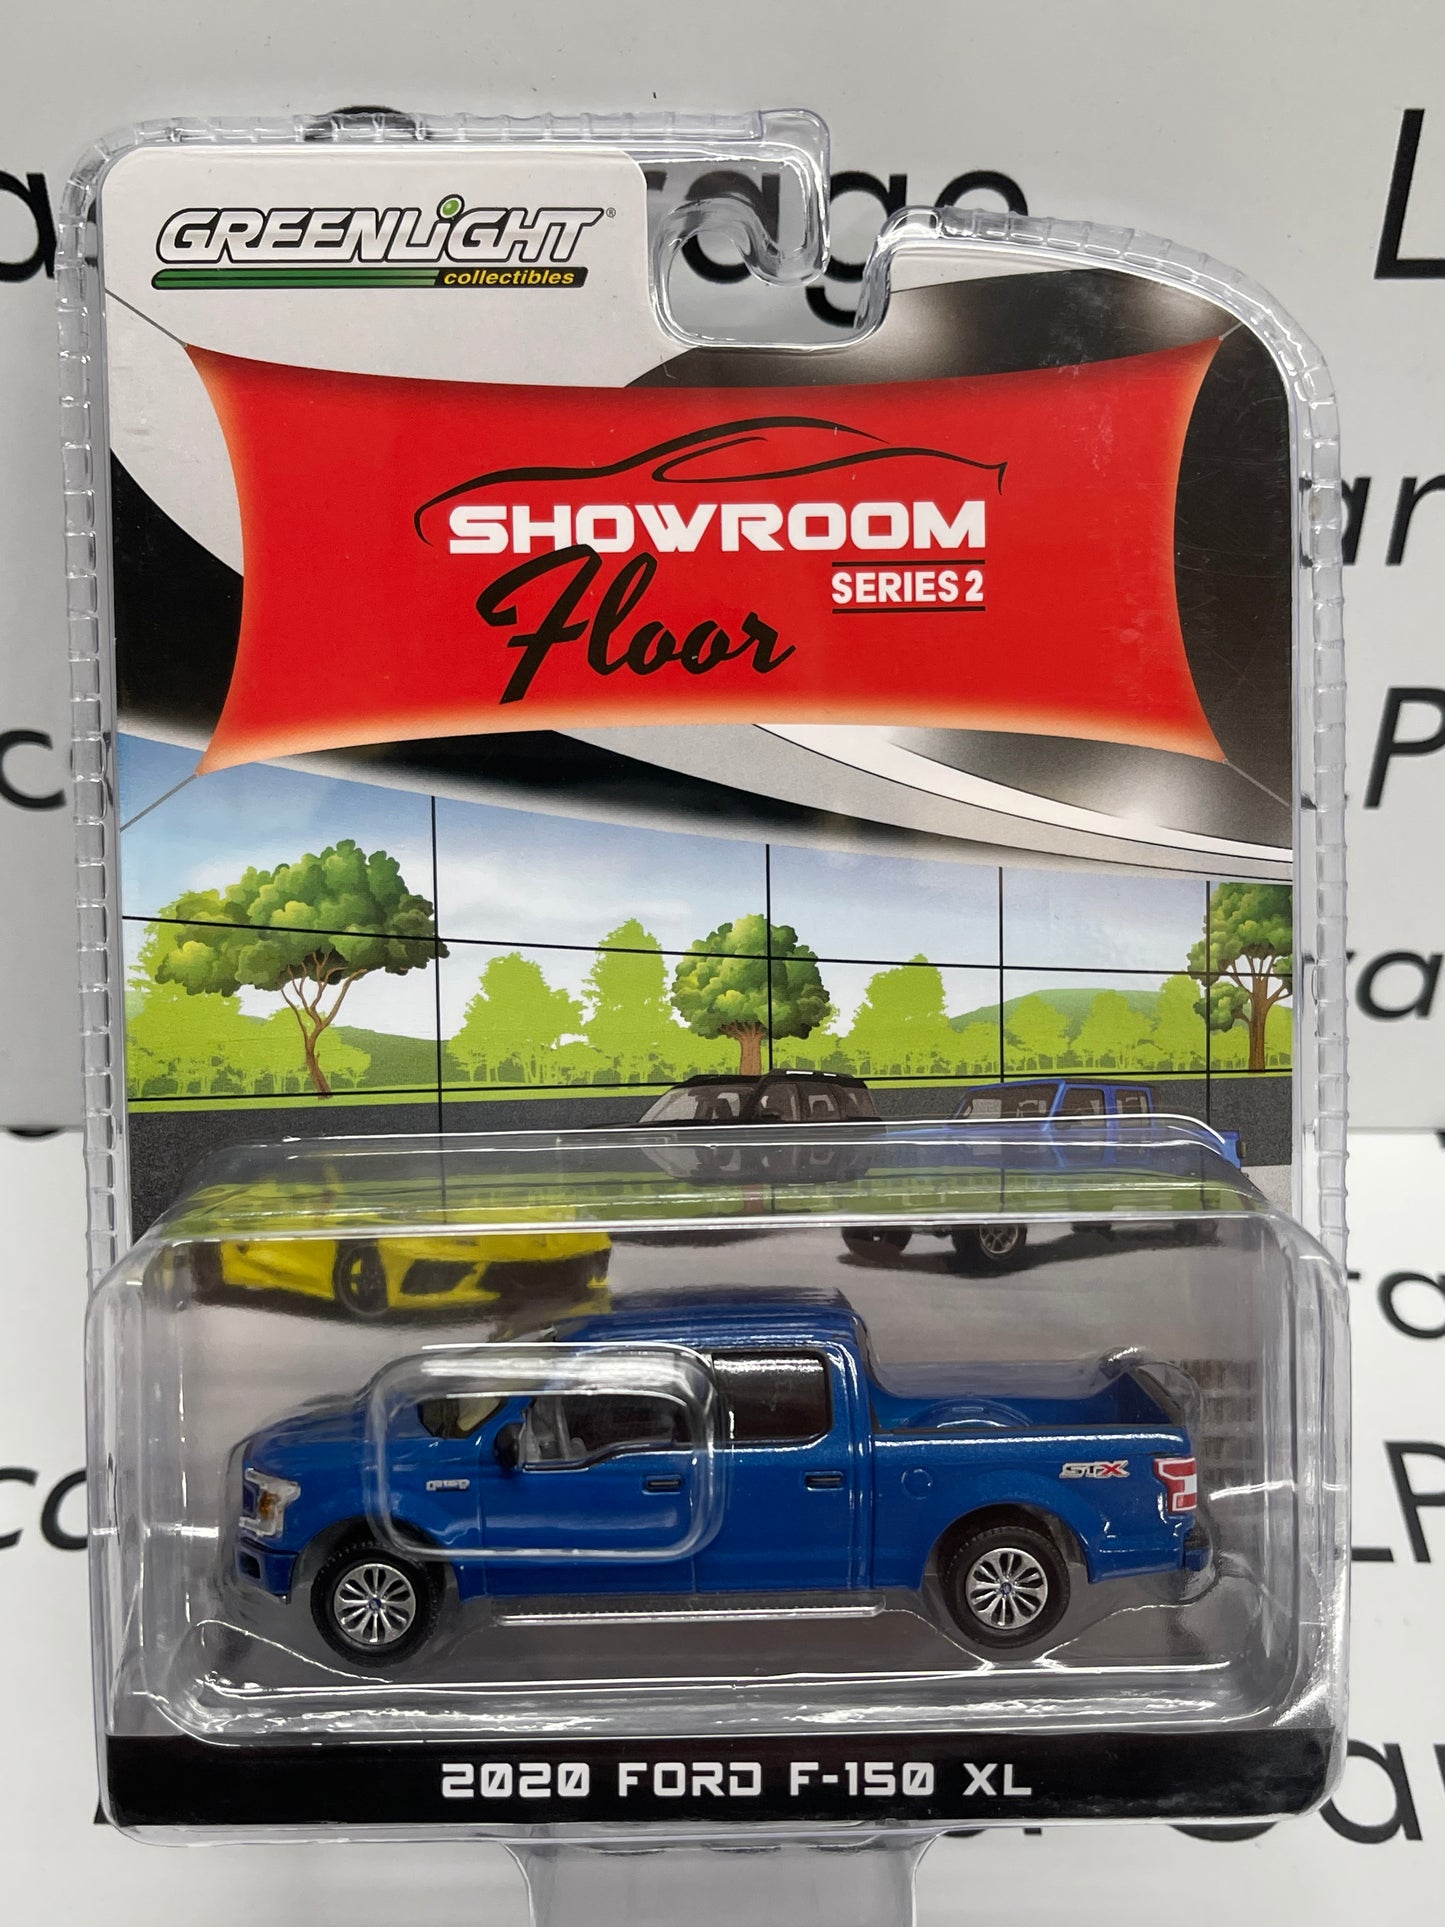 GREENLIGHT 2020 Ford F-150 XL Blue Showroom Floor Series 2 1:64 Diecast